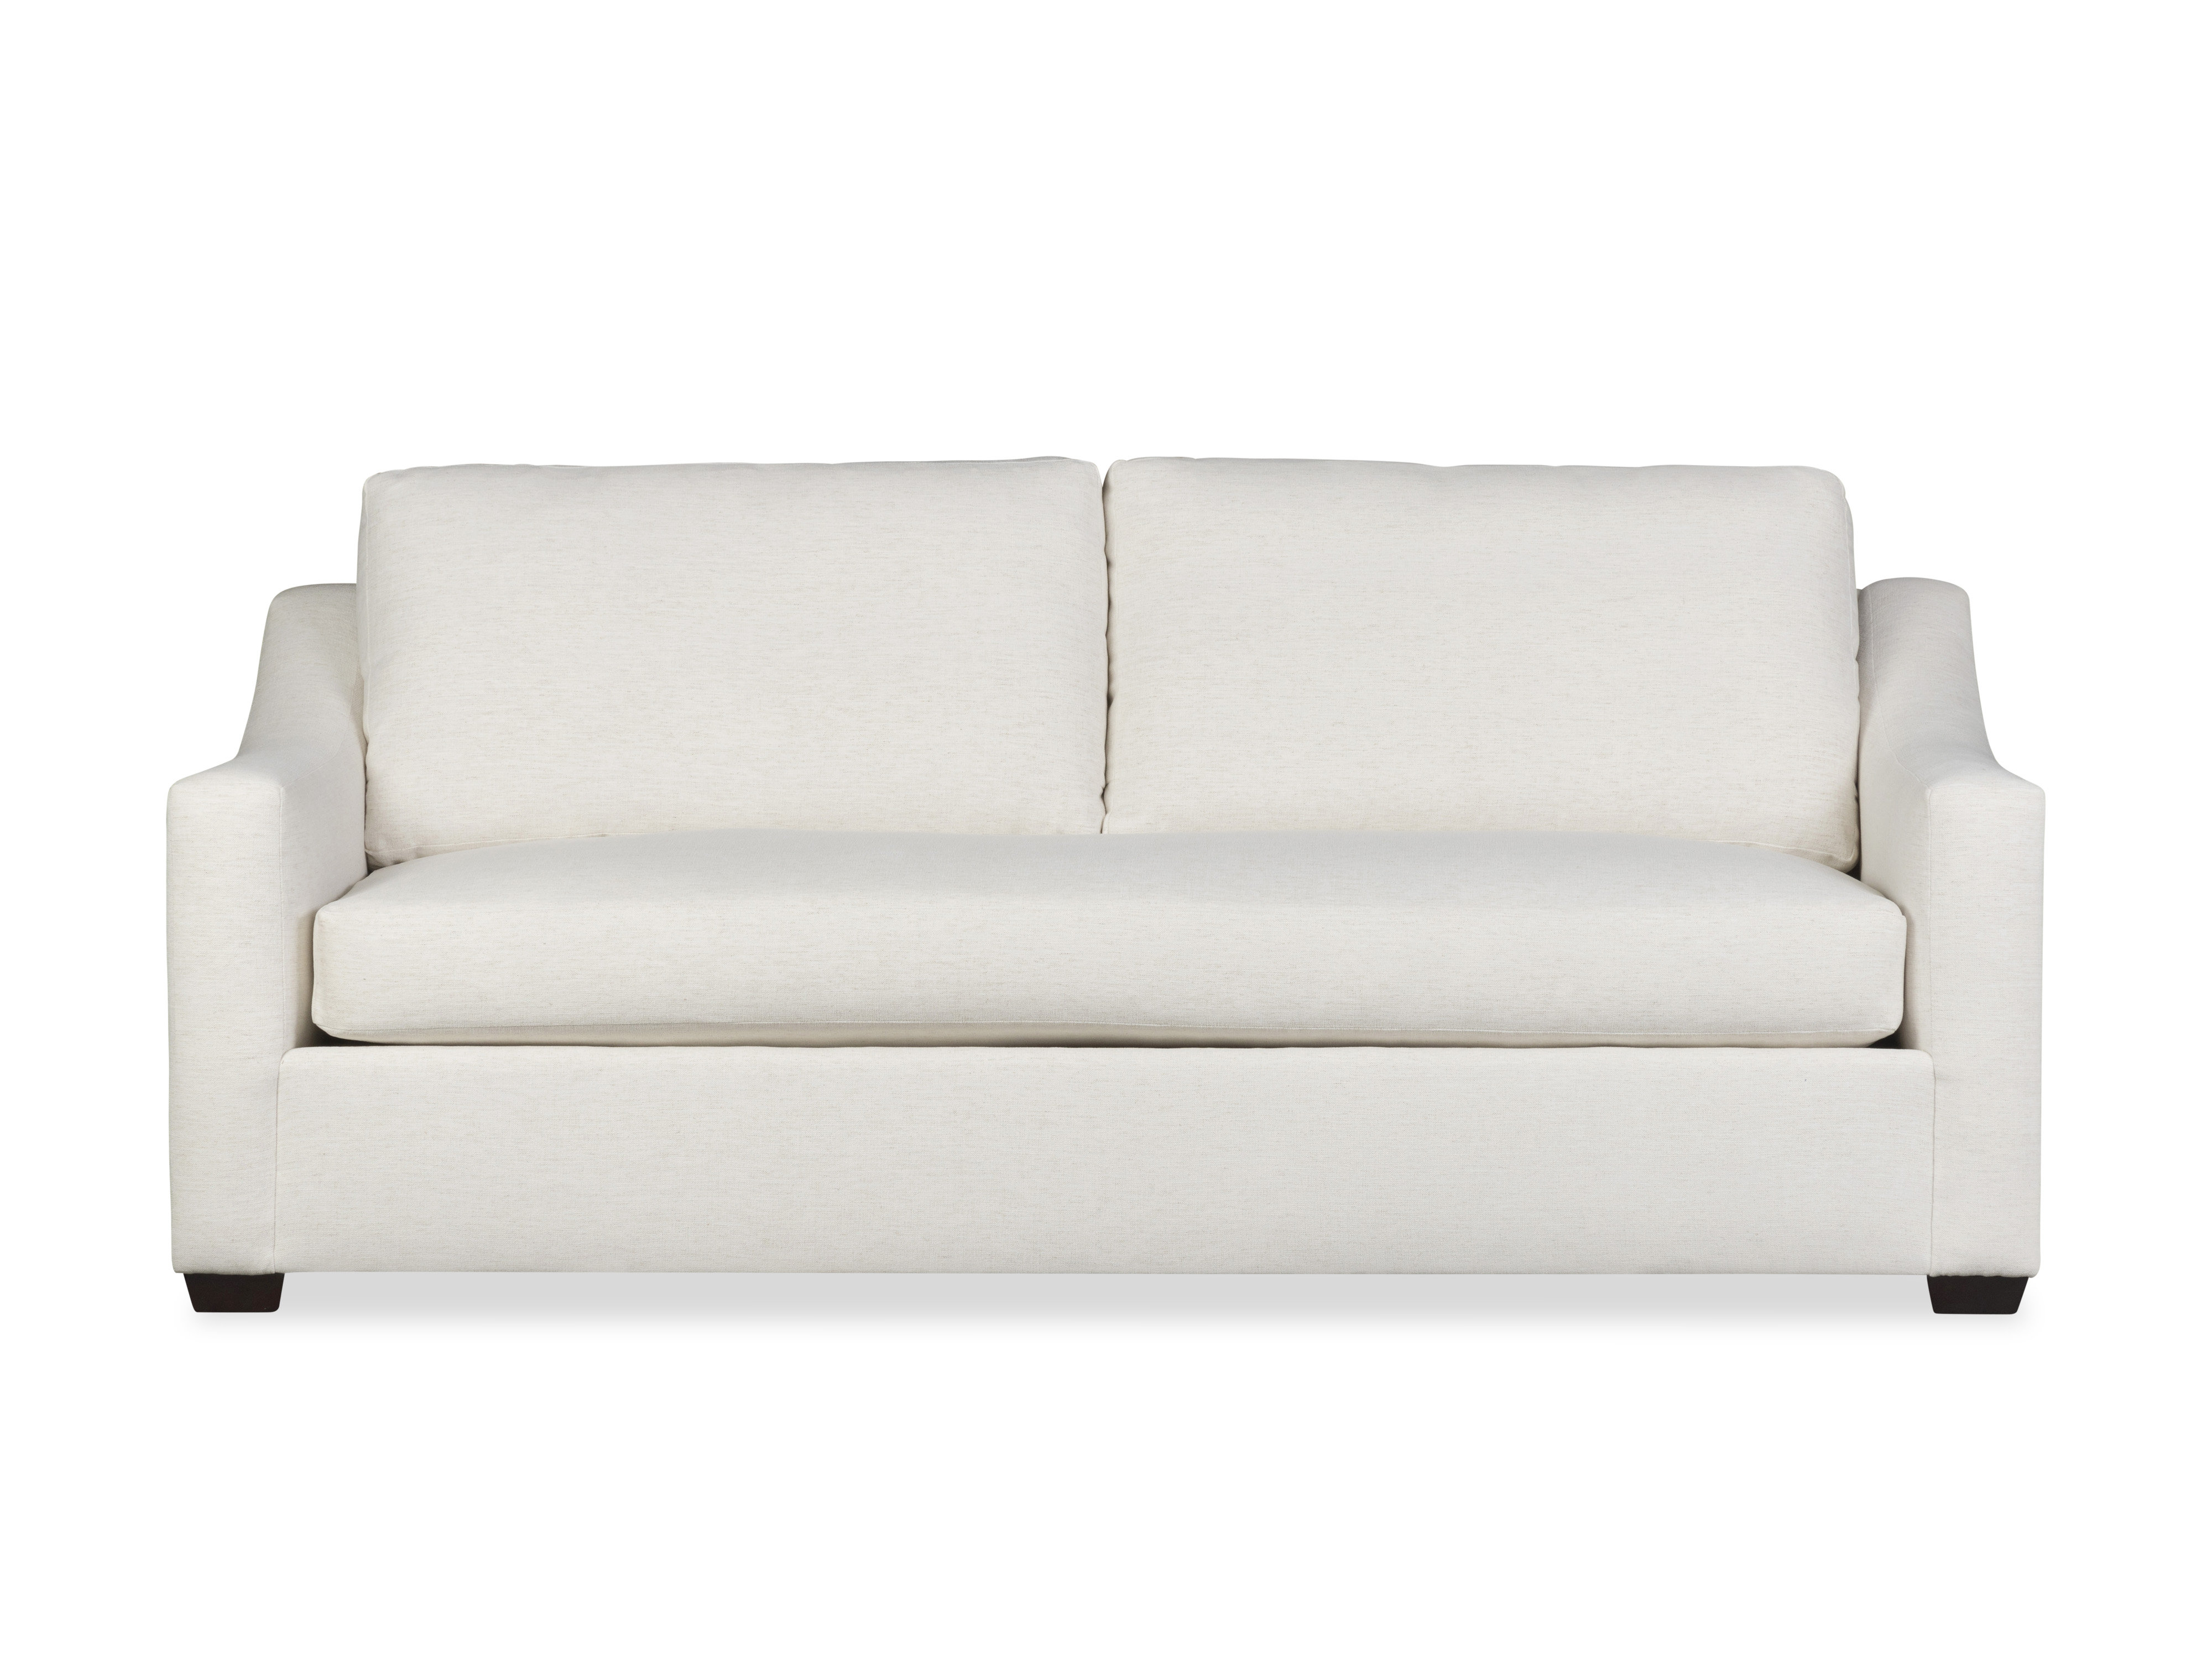 Navy Classic Ticking Stripe Upholstered Custom Classic Sofa